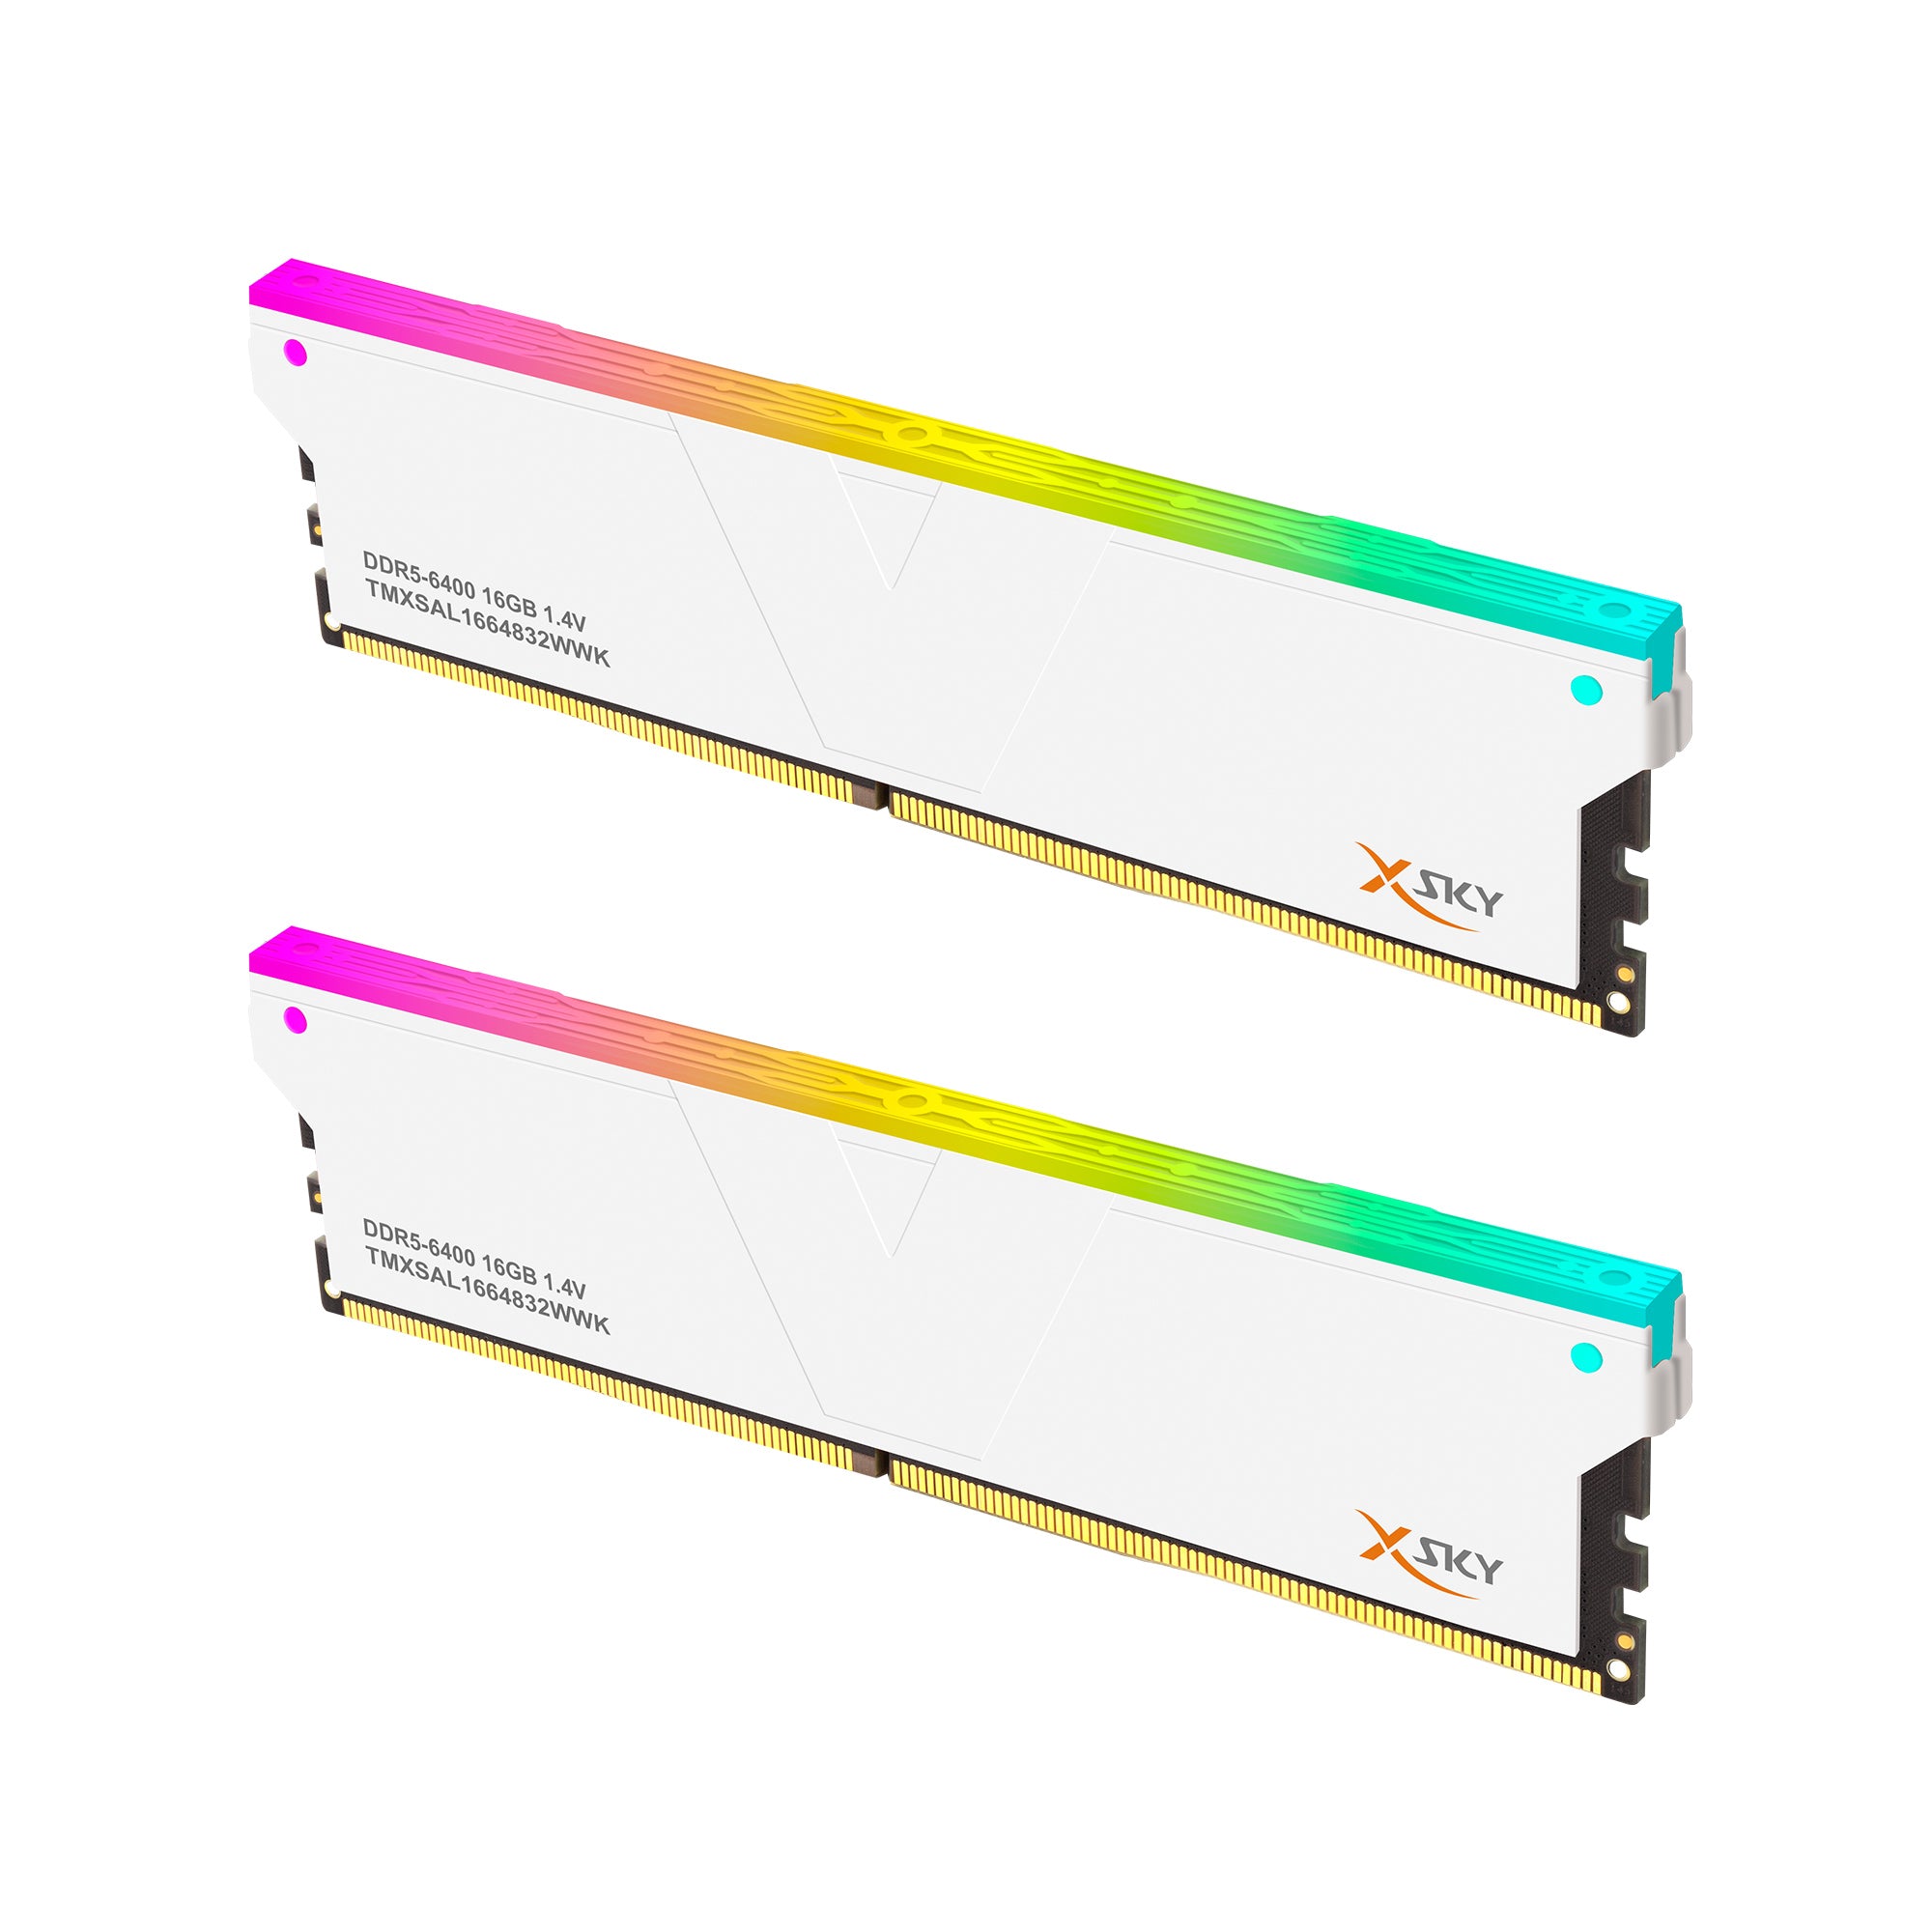 CORSAIR VENGEANCE RGB DDR5 RAM 32GB (2x16GB) 6000MHz CL30 AMD EXPO